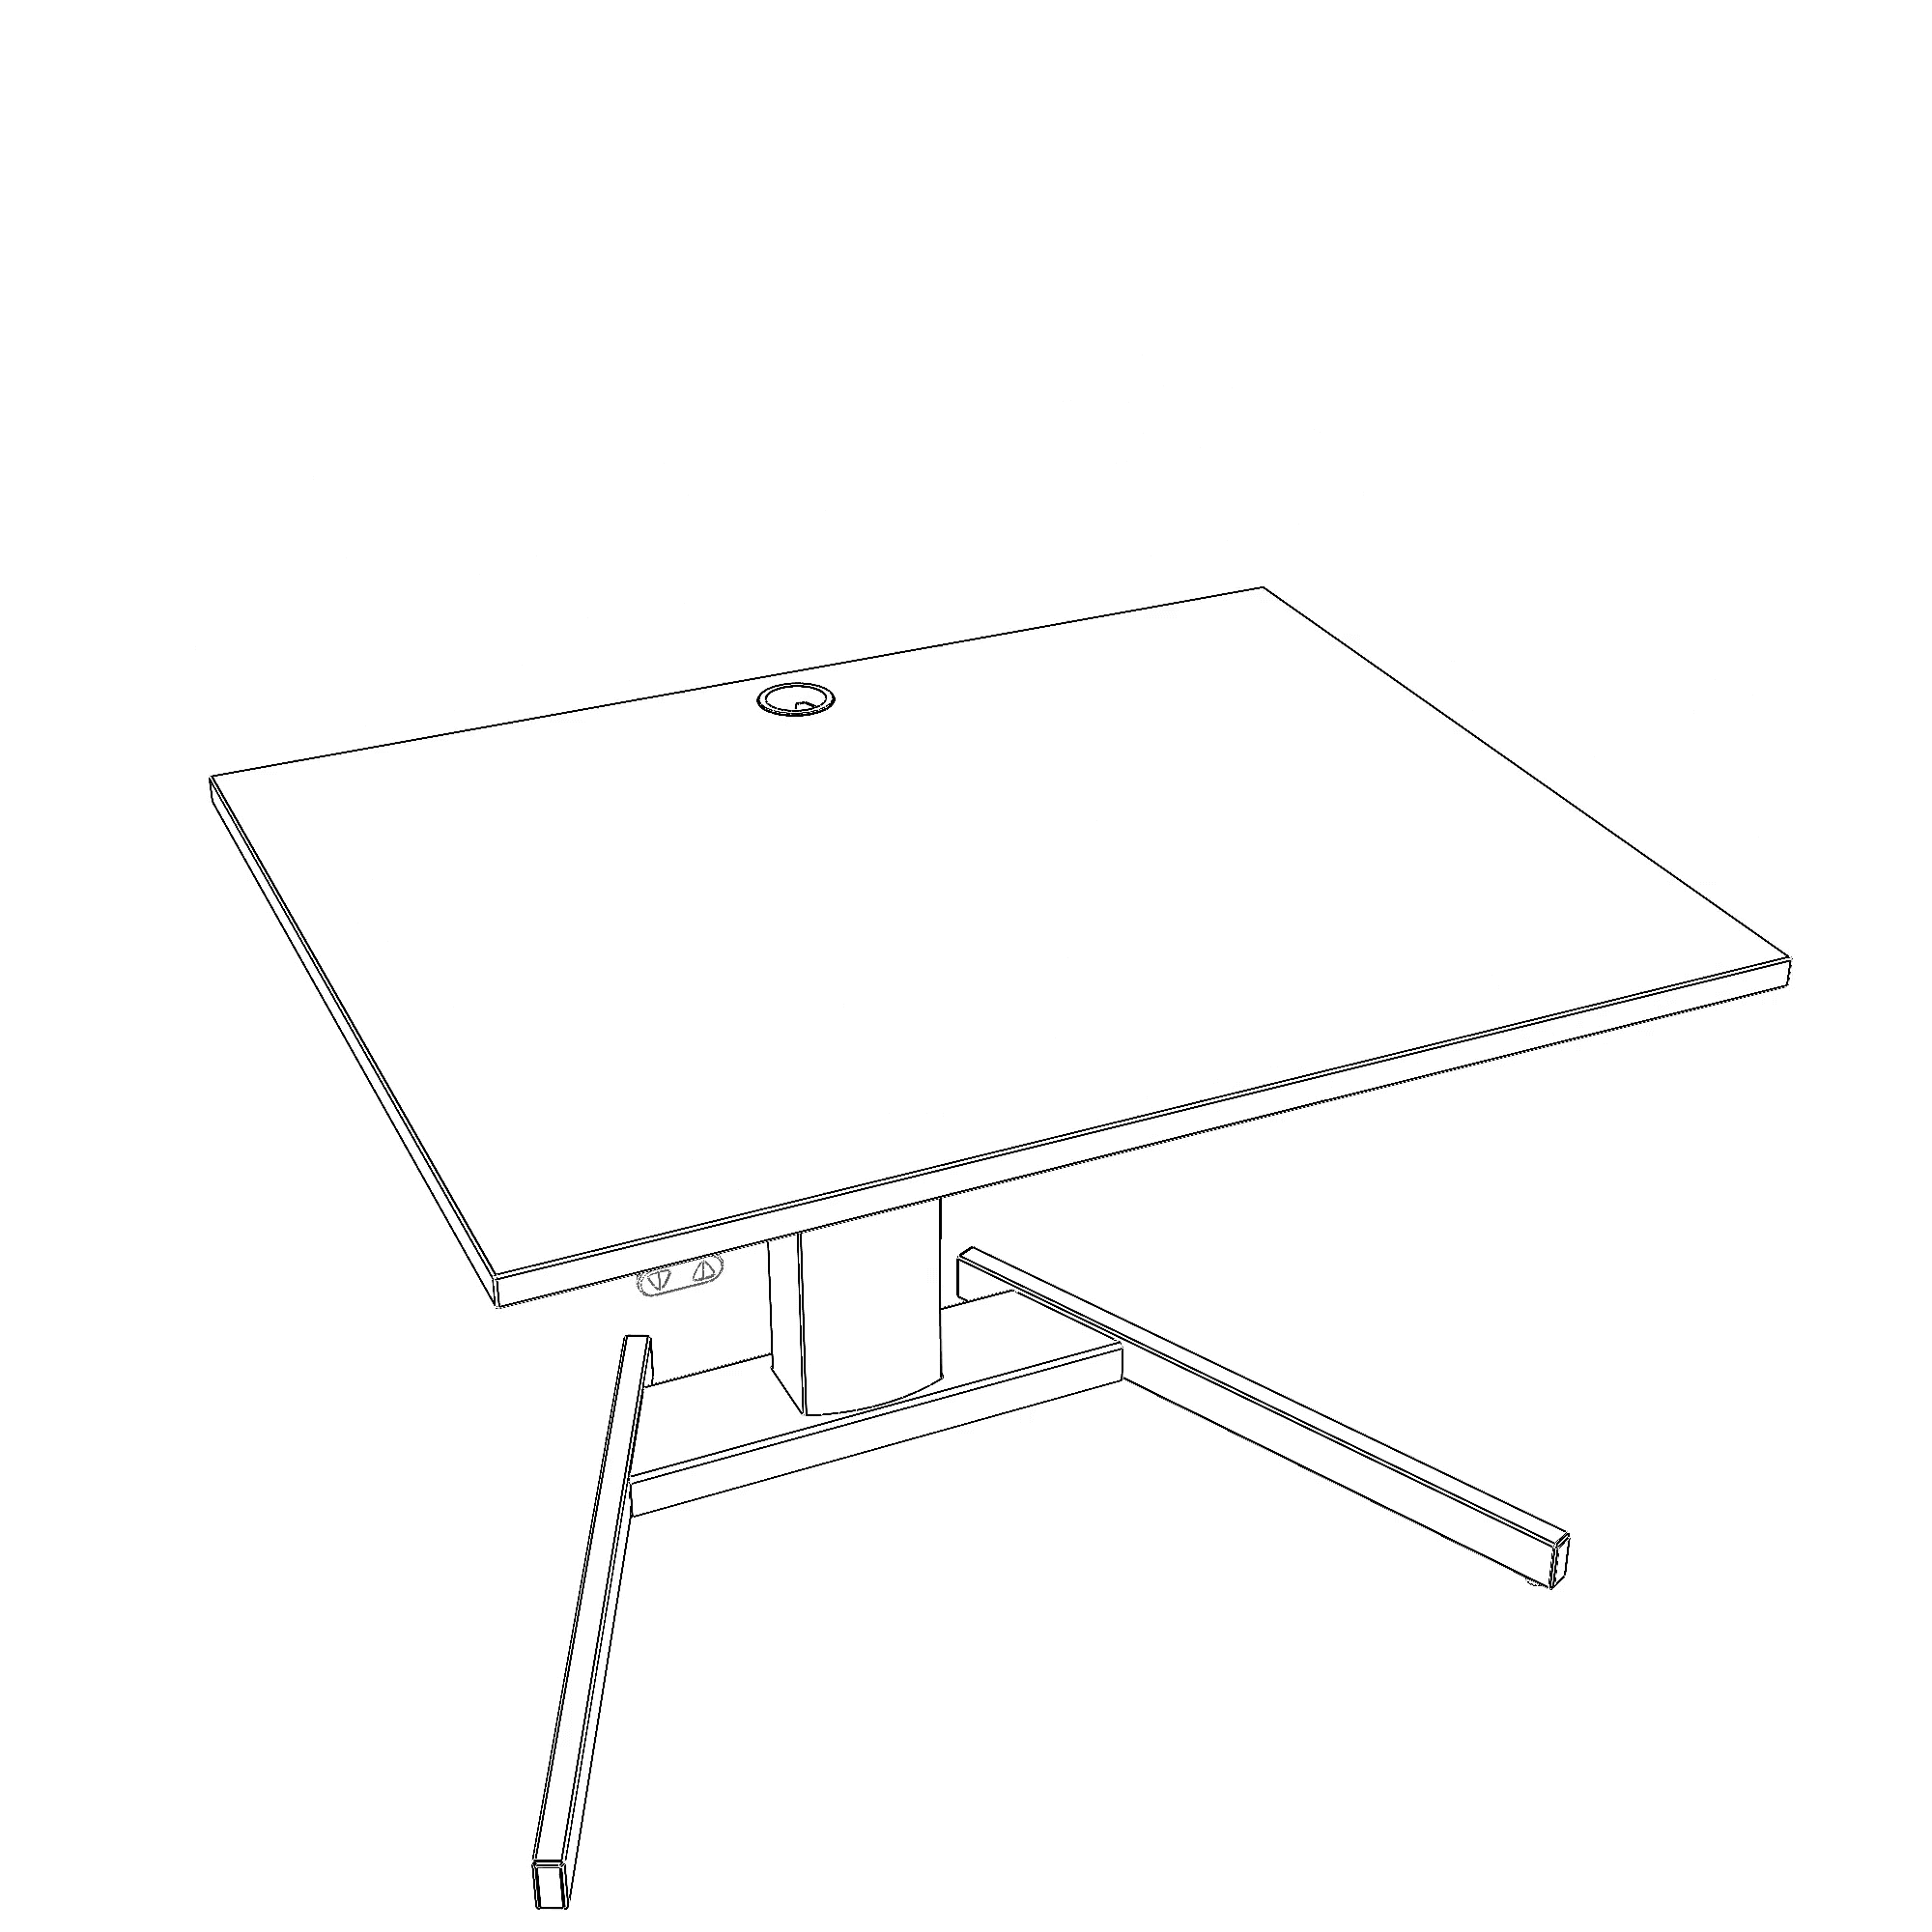 Electric Adjustable Desk | 120x80 cm | Maple with black frame